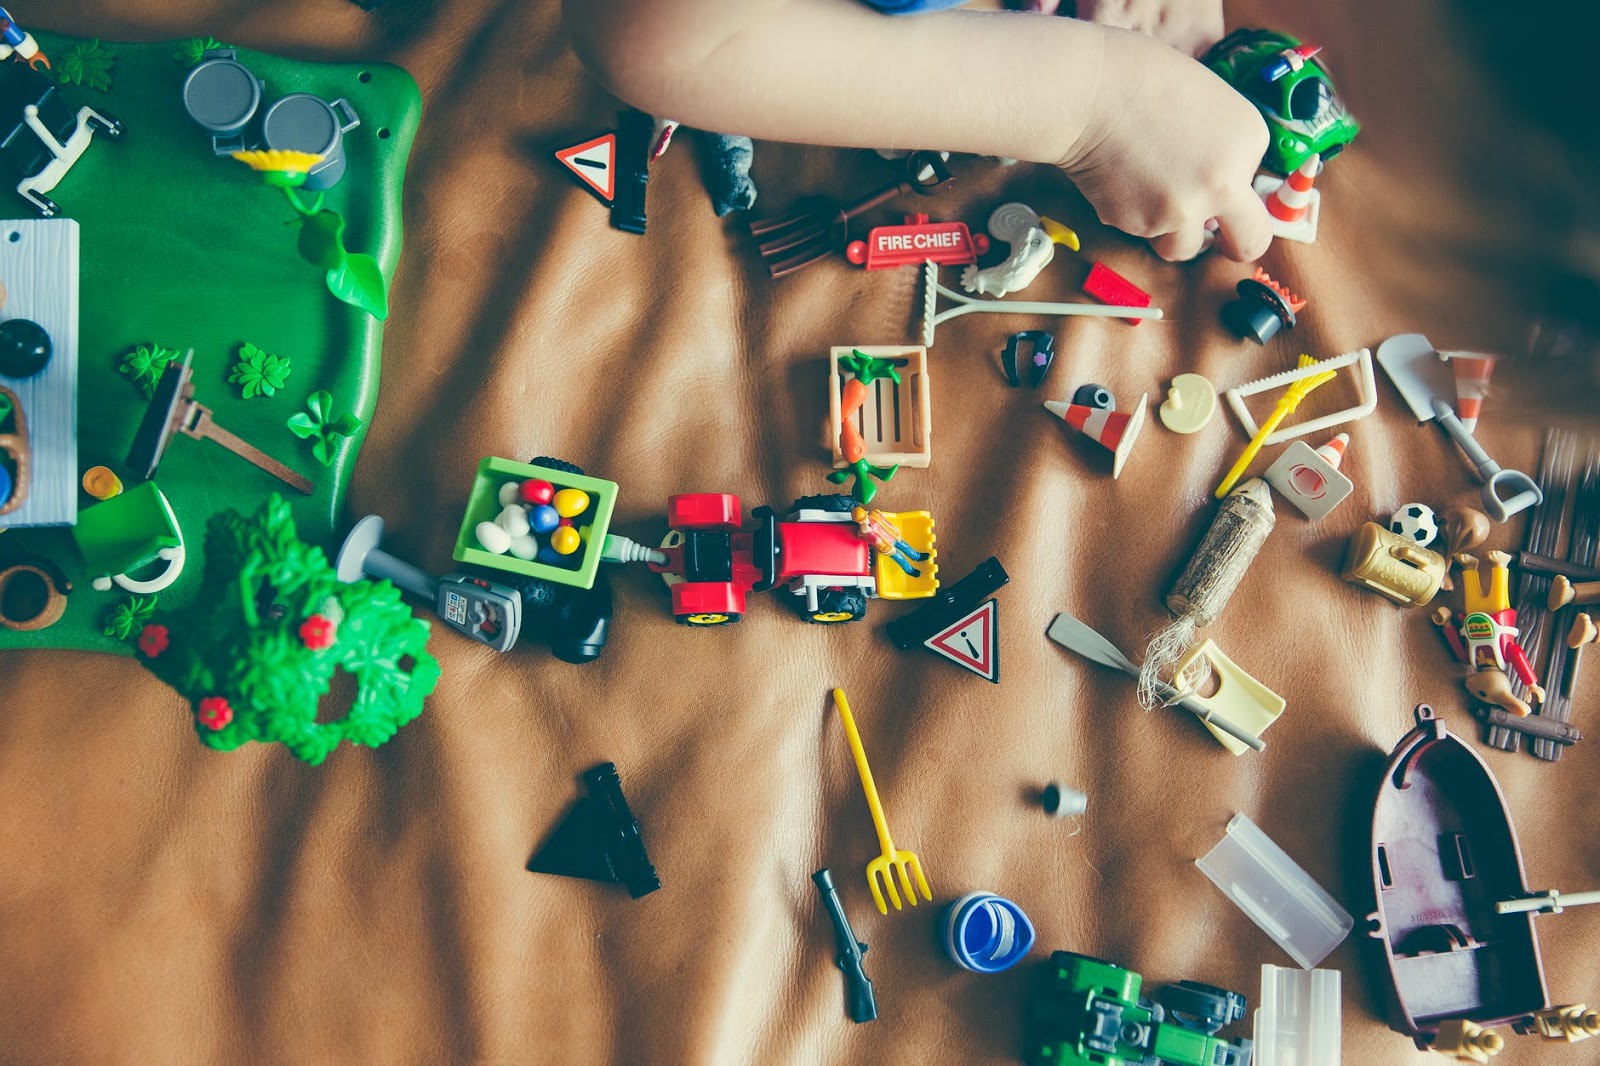  Tempat  Jual  Mainan Anak di  Bandung  Blog and Inspiration